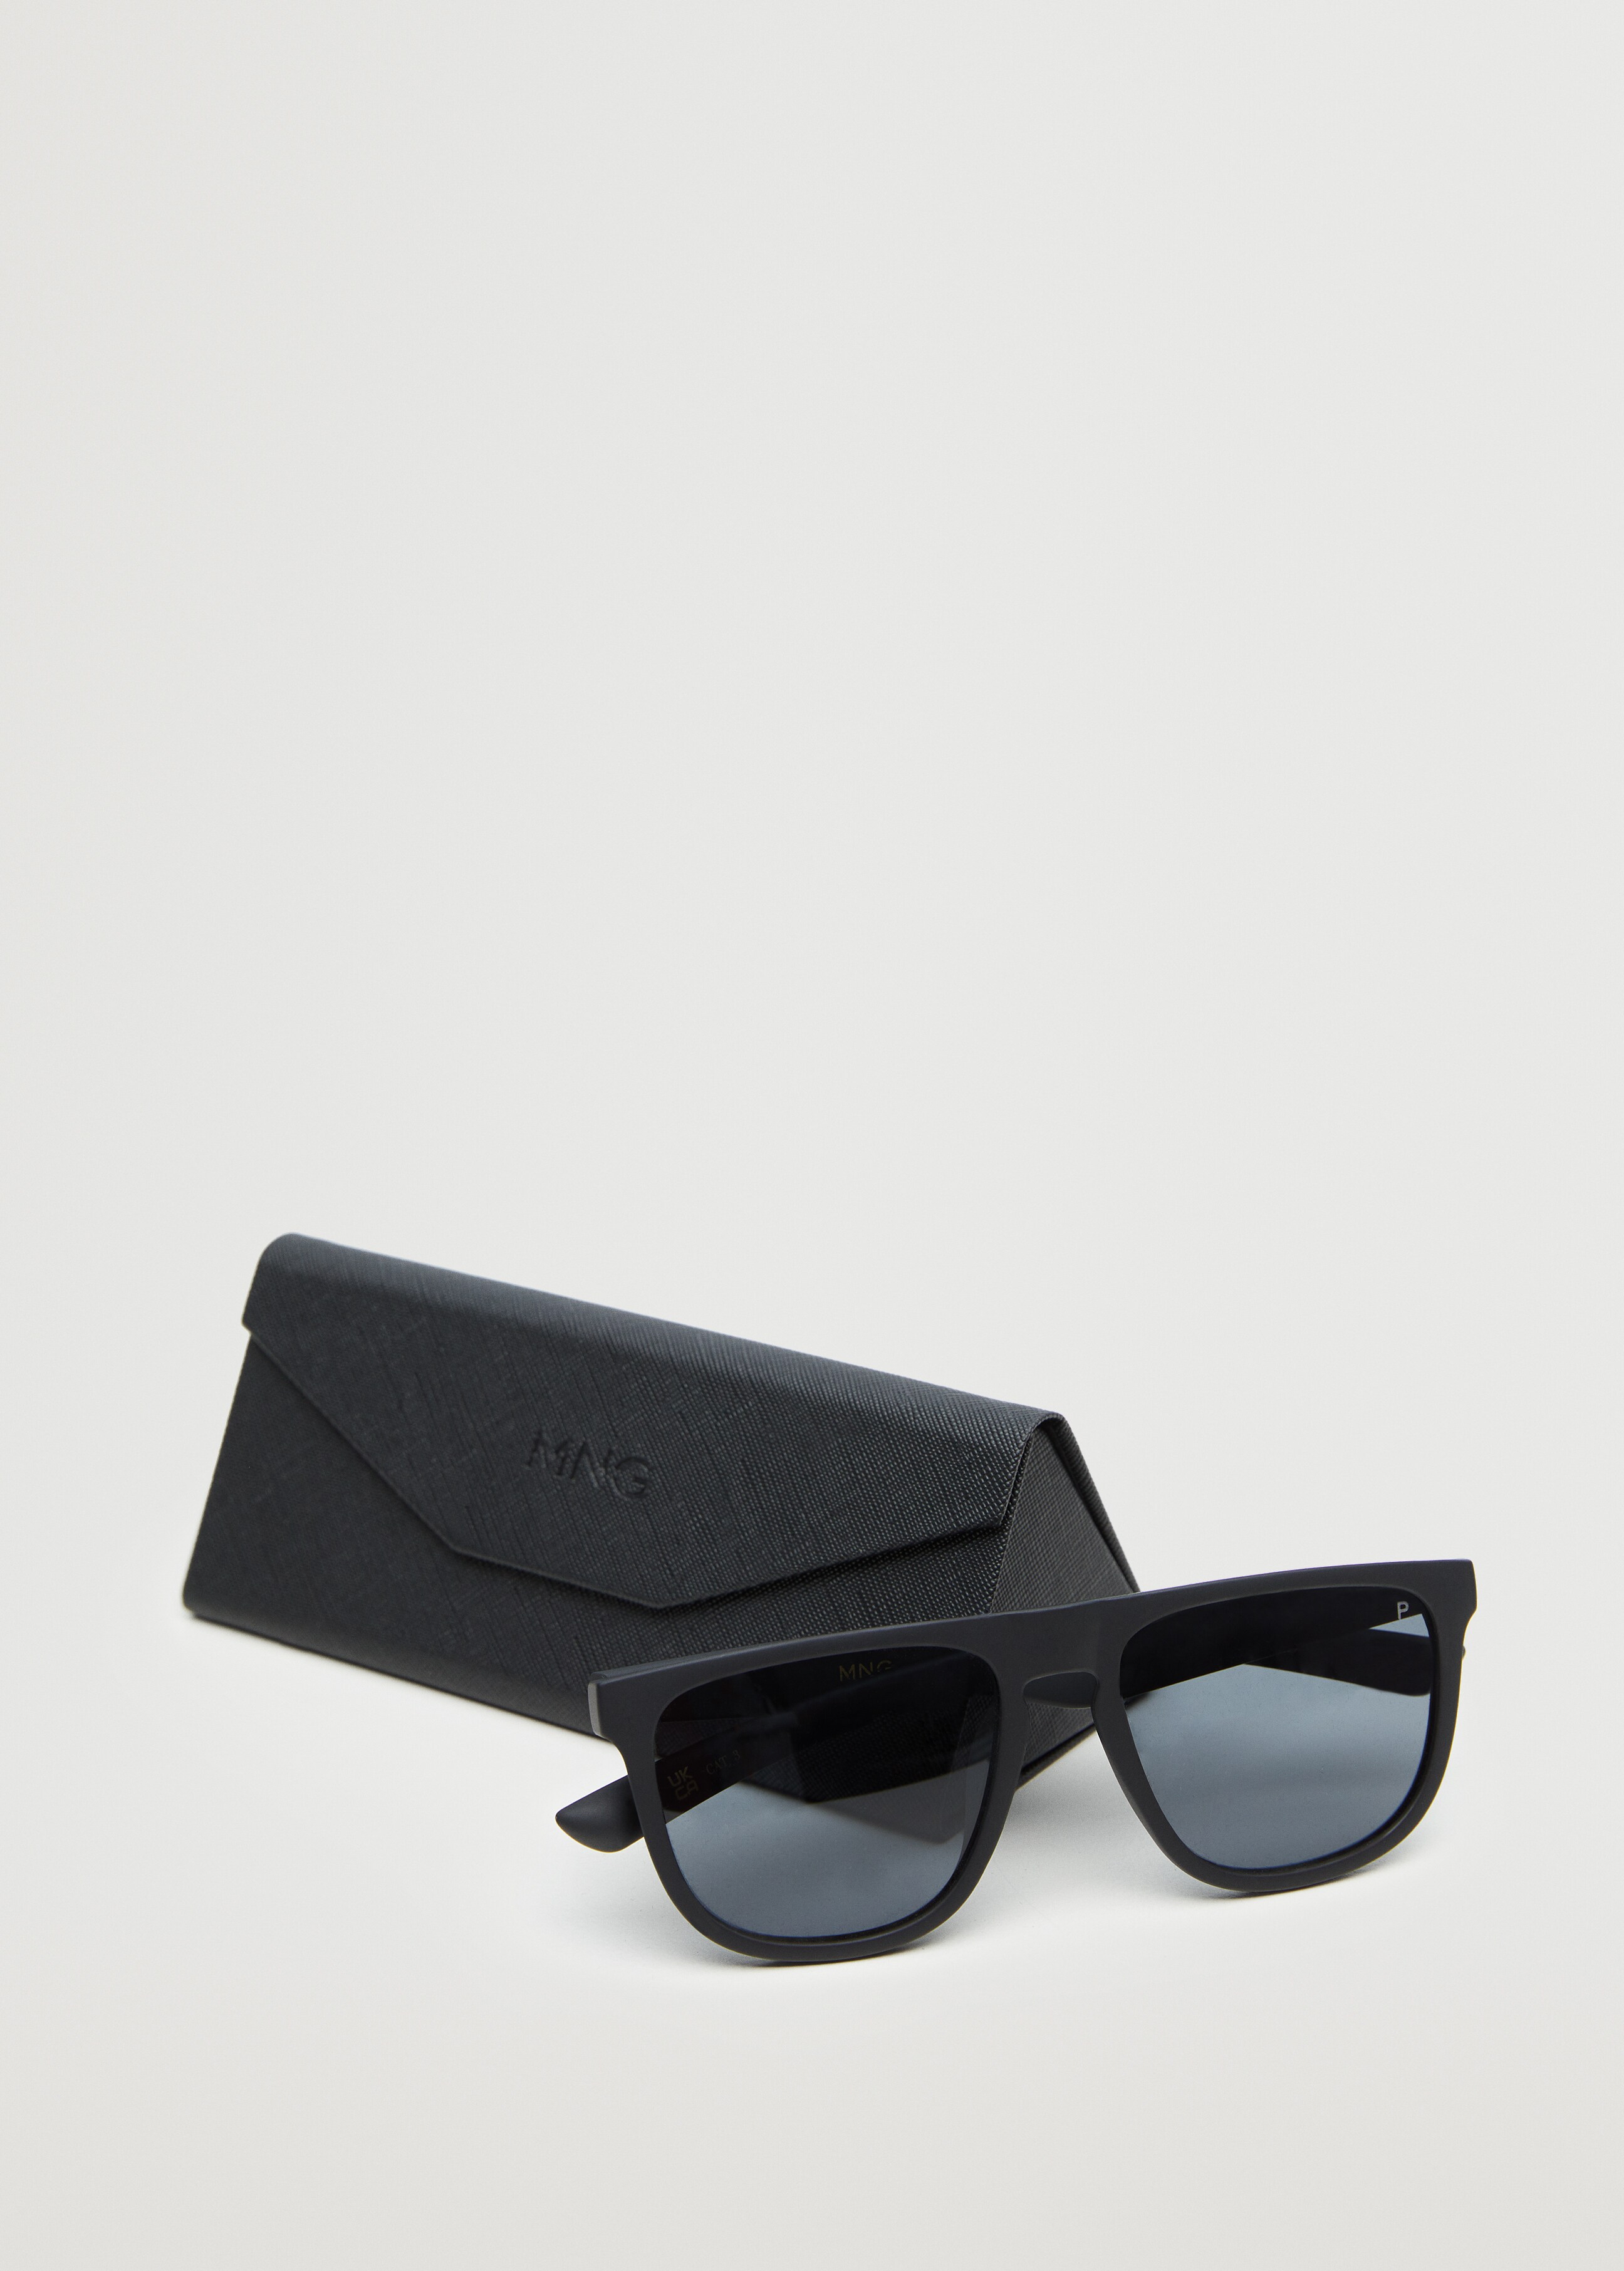 Polarised sunglasses - Details of the article 5